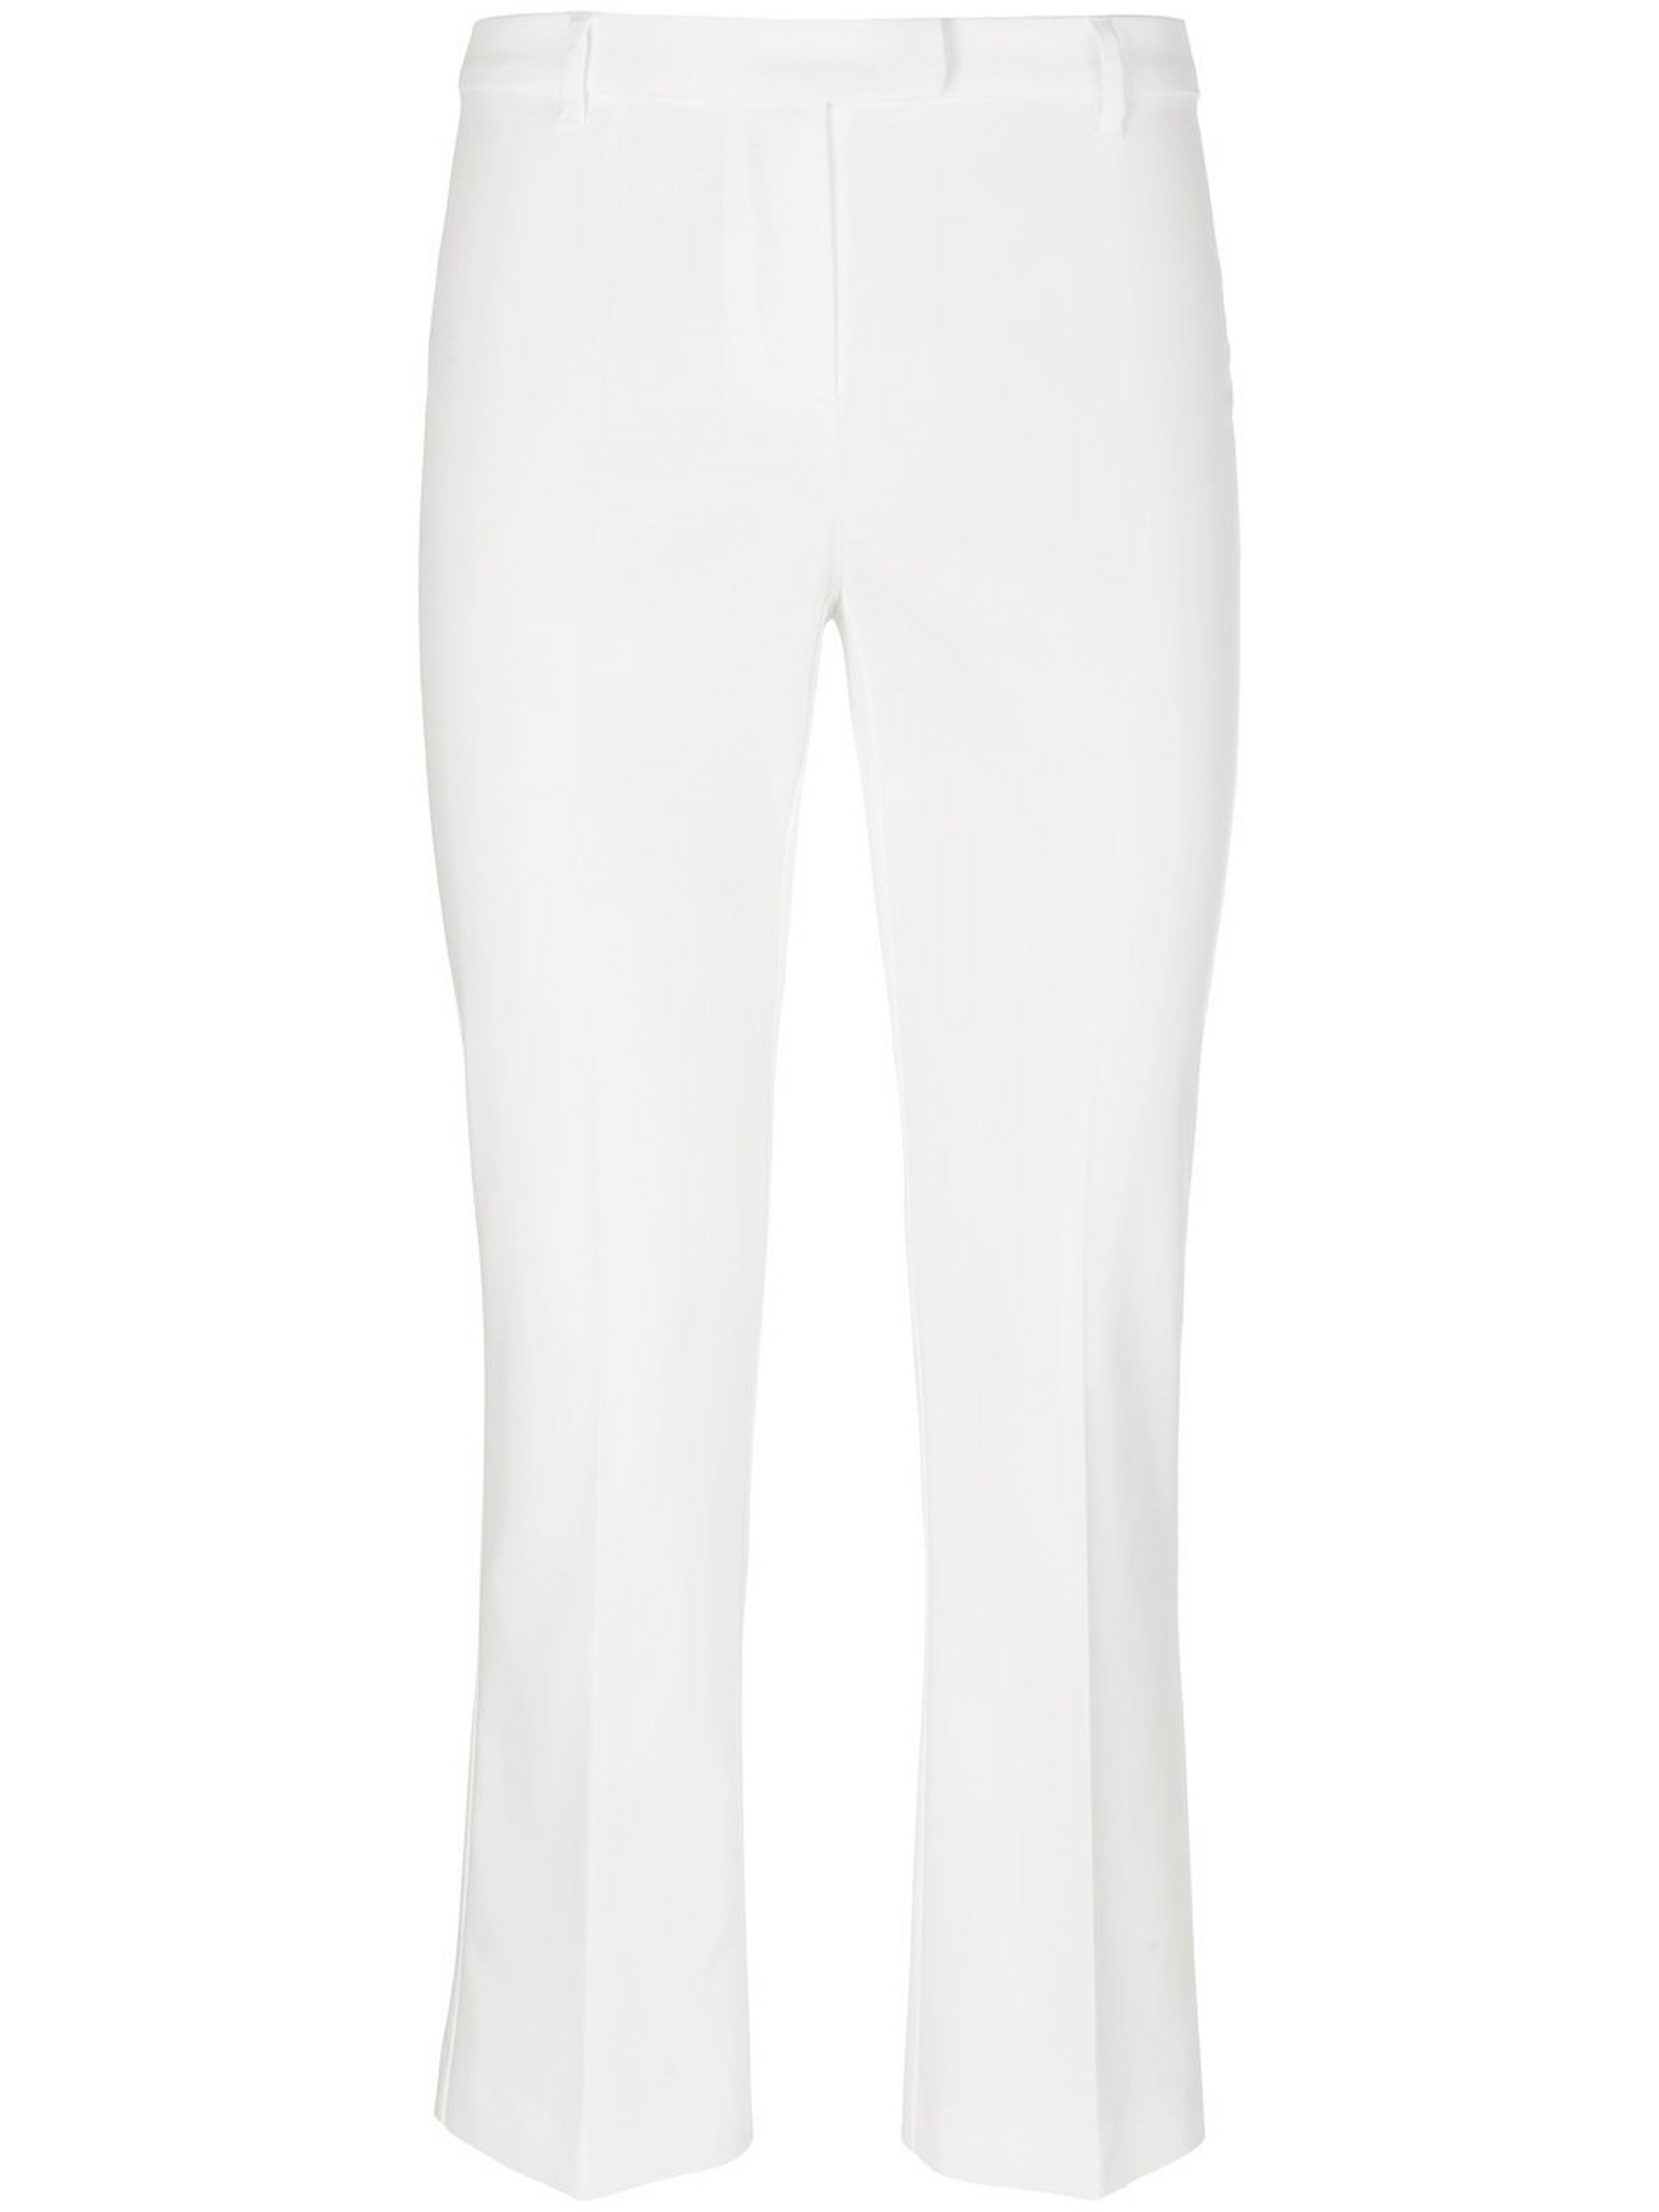 Le pantalon 7/8 micro-coton Premium  Fadenmeister Berlin blanc taille 46